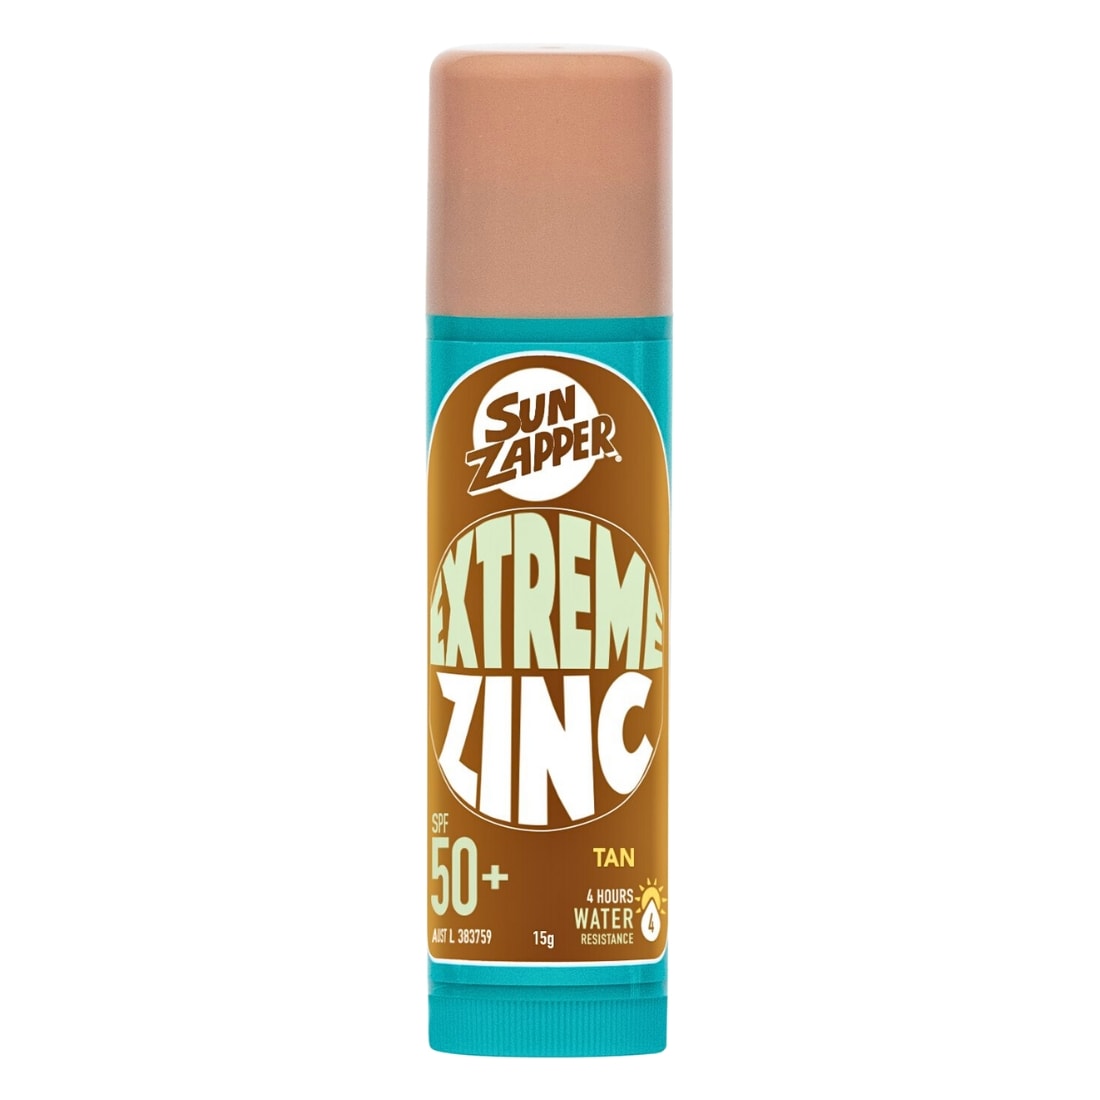 Sun Zapper Extreme Zinc Spf50+ Face Stick - Tan - Sunscreen by Sun Zapper 15g